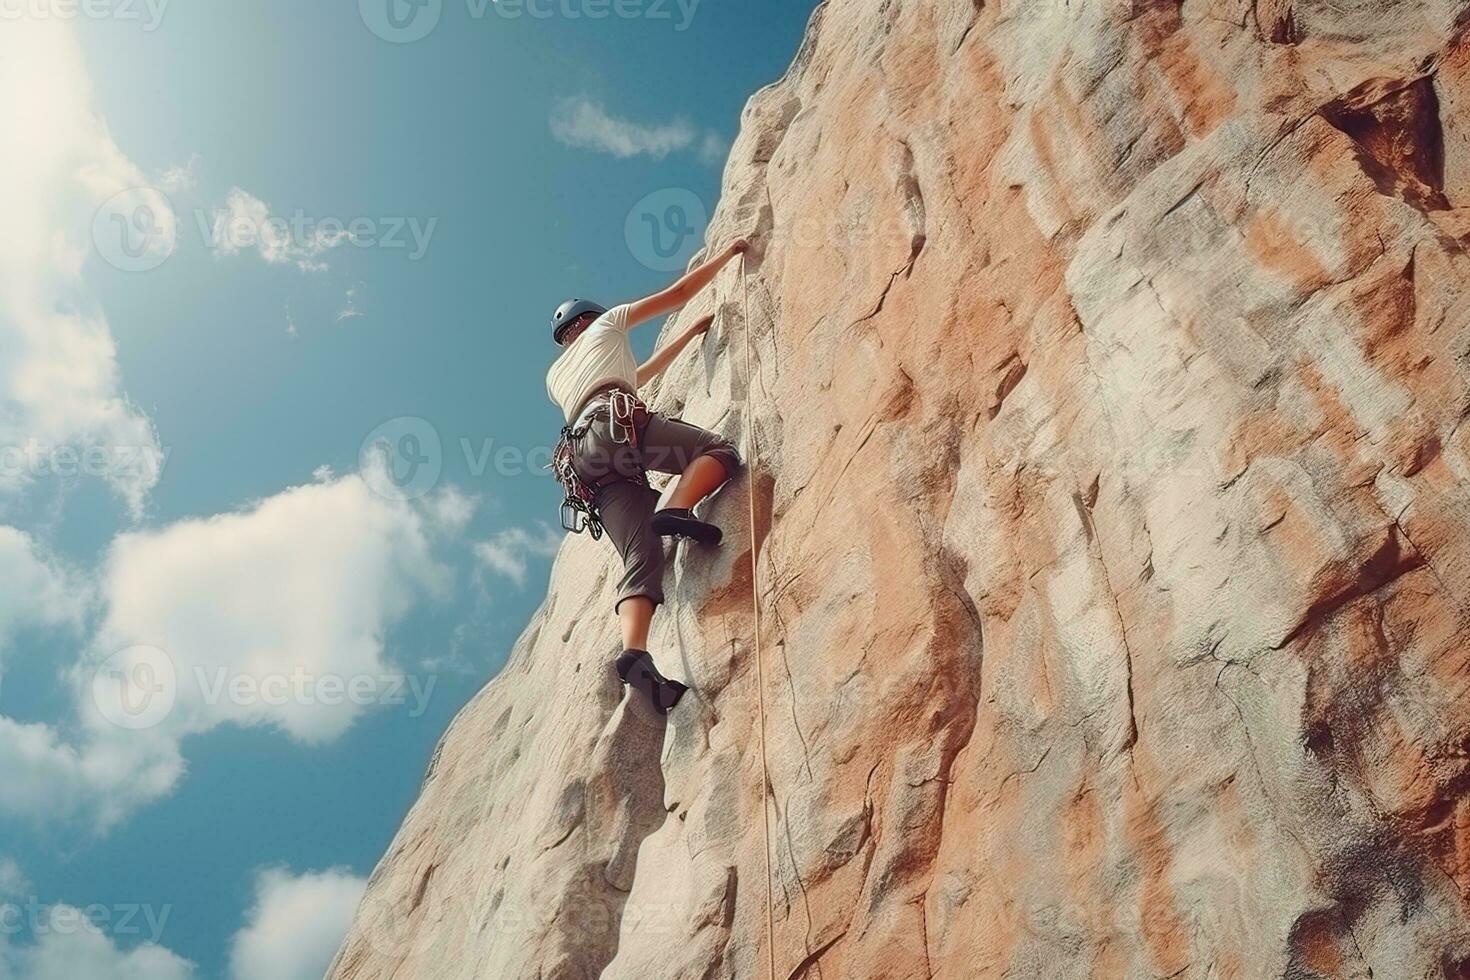 klimmer klimt de steen. extreem hobby. sport klimmen. ai gegenereerd. foto